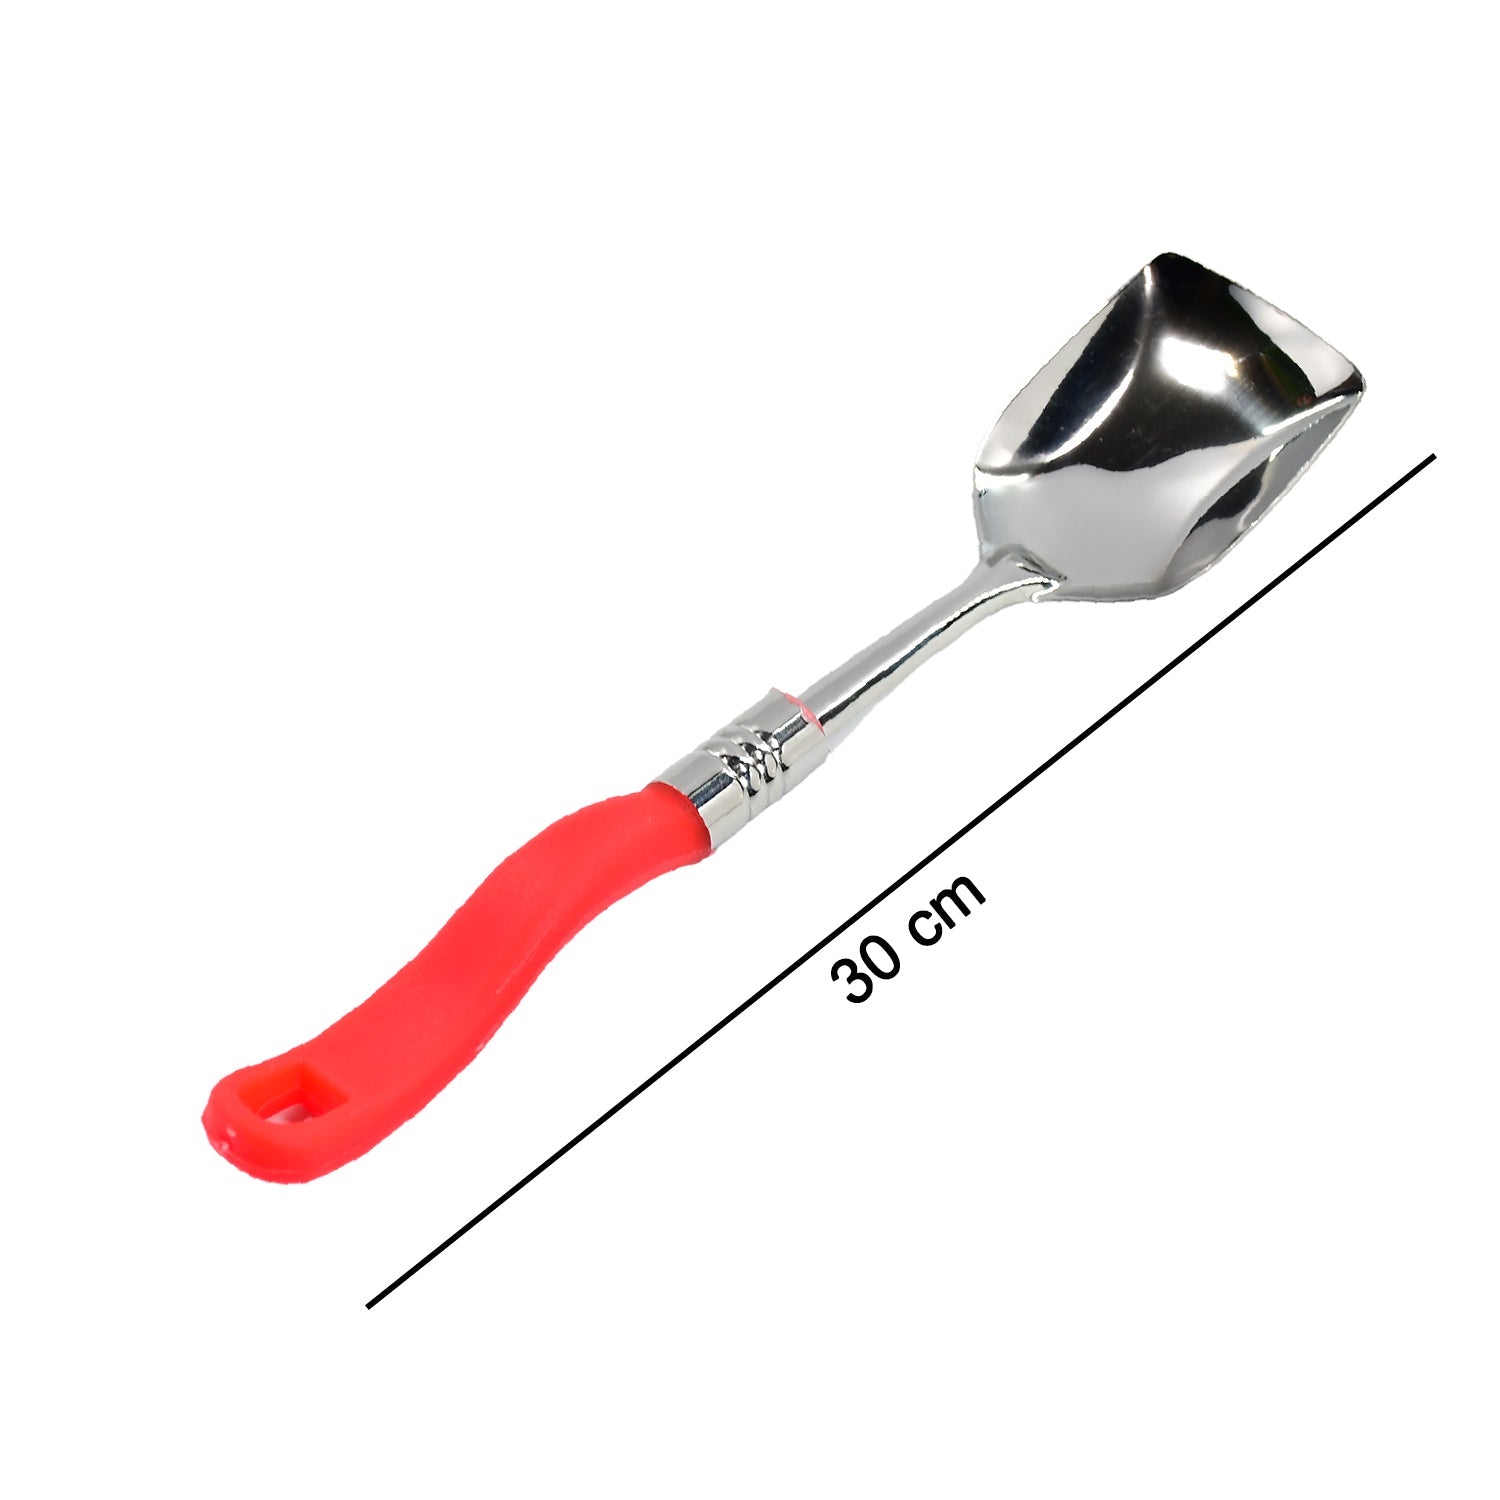 2938 Square Head Spoons Stainless Steel Spoon for Ice Cream, Dessert etc DeoDap